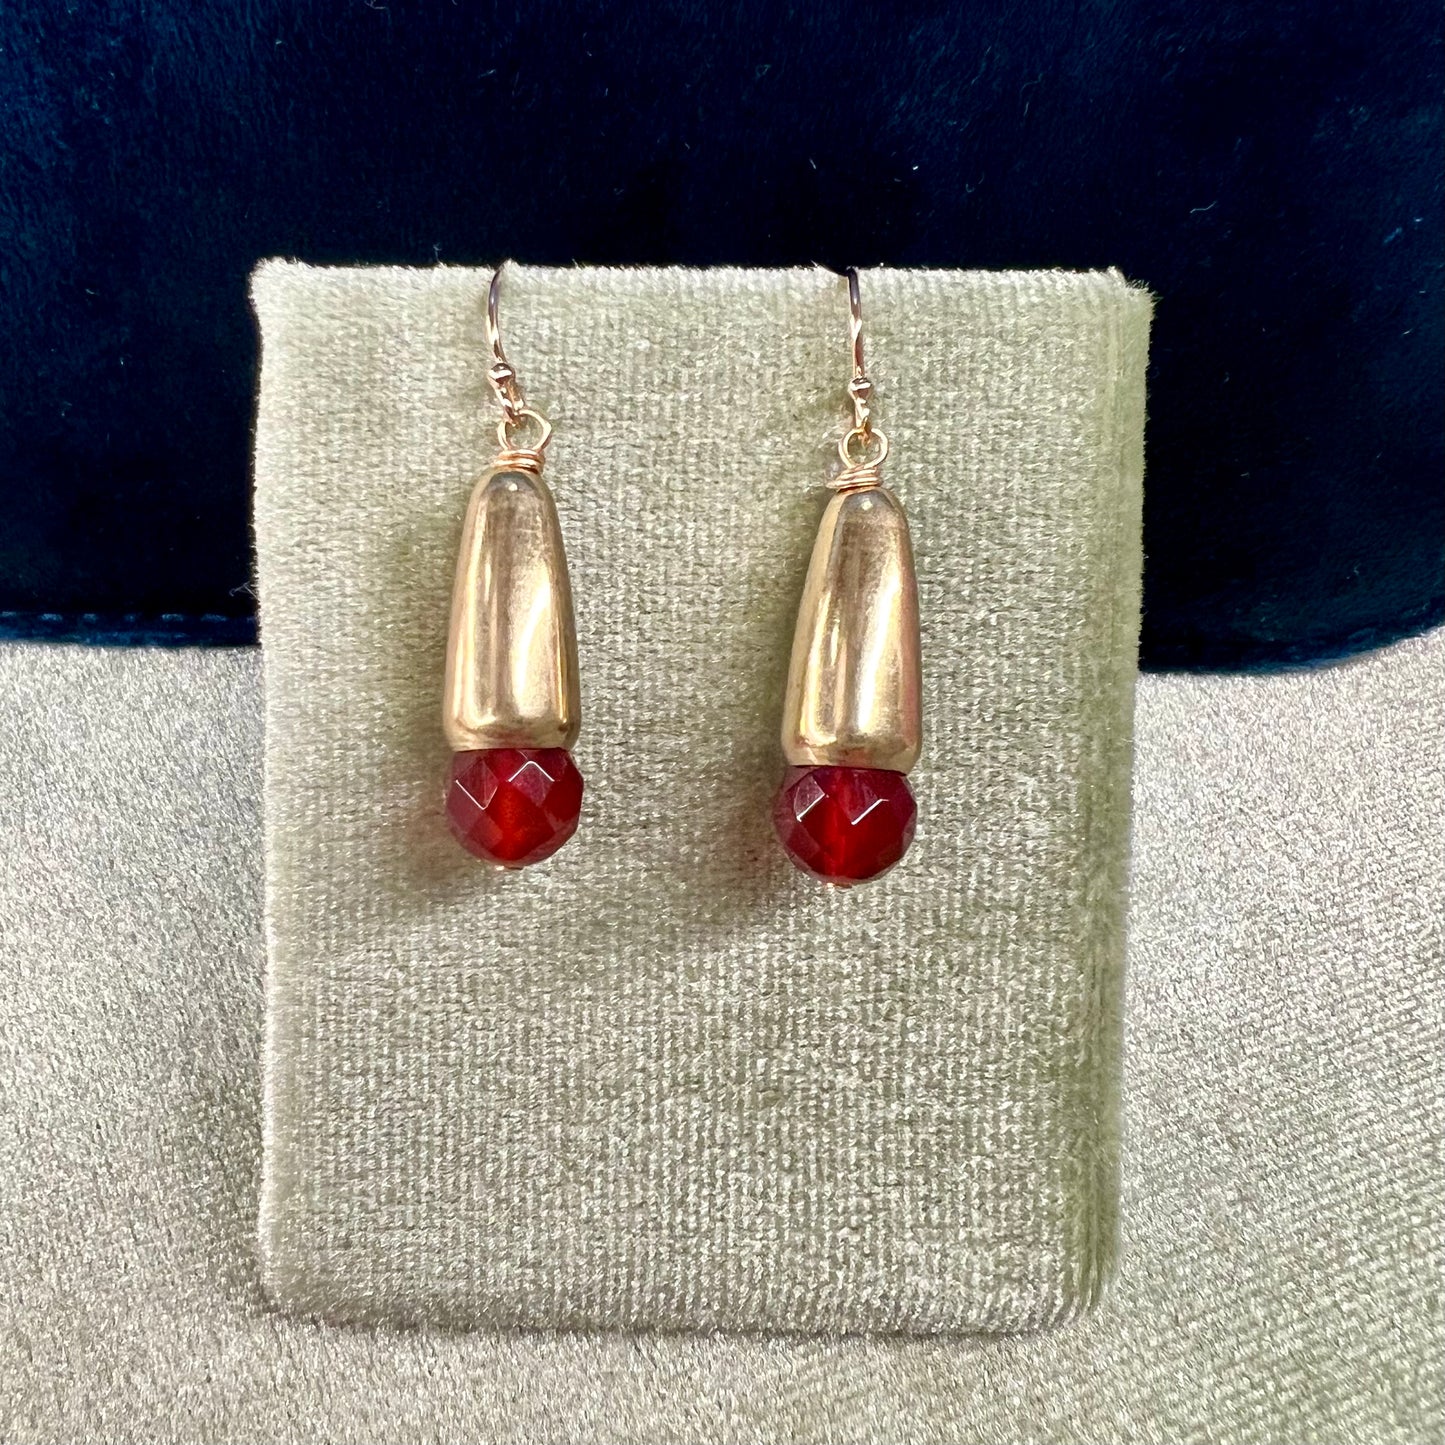 Beaded Drop earrings by Cire Alexandria